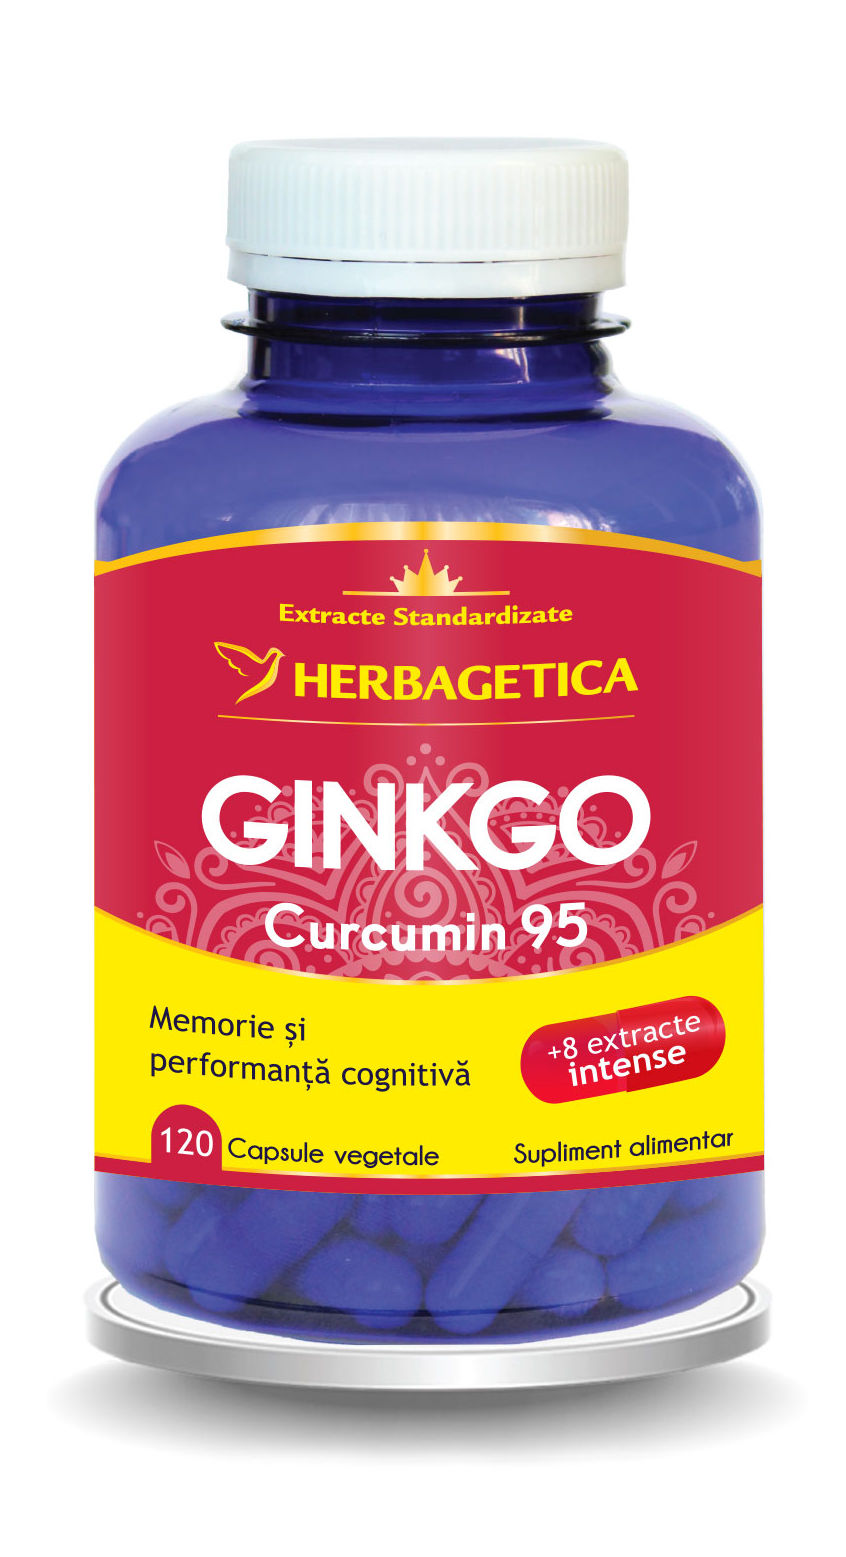 Ginkgo curcumin95